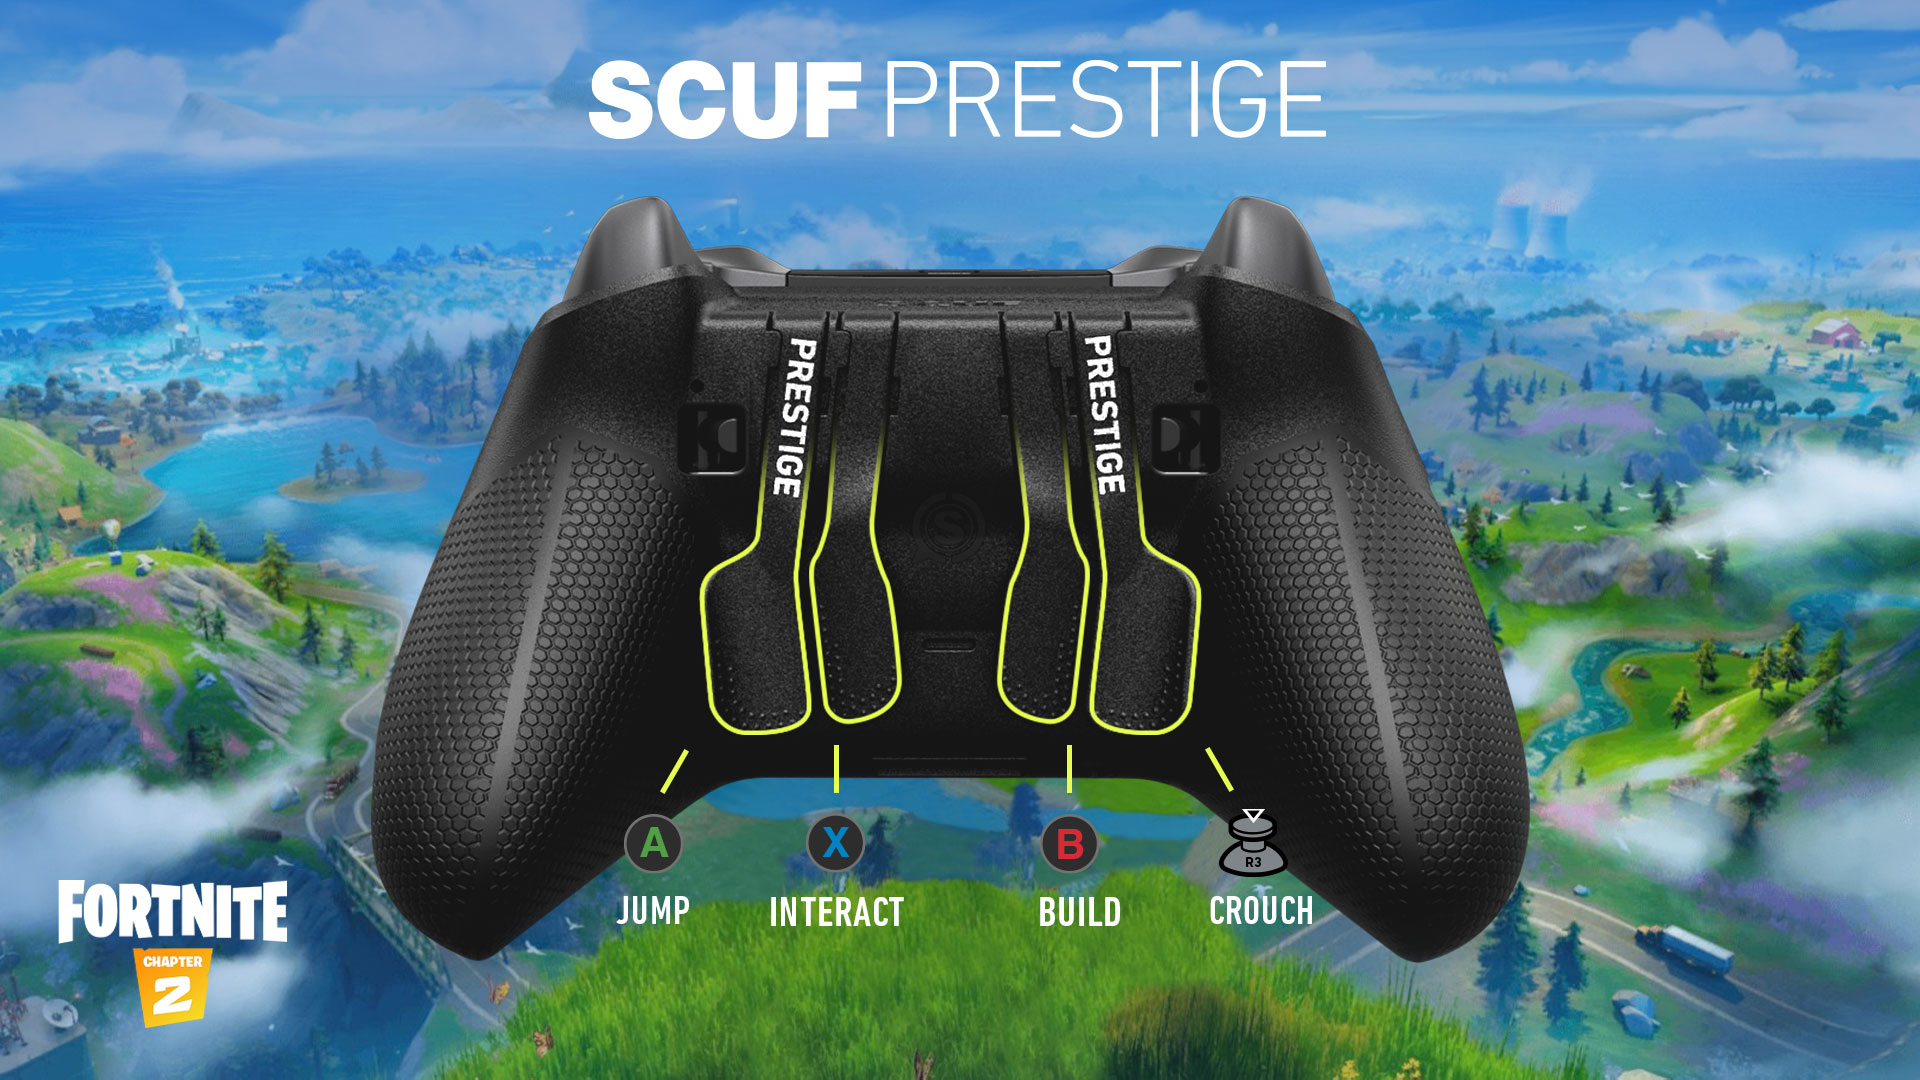 SCUF Prestige Xbox One Fortnite Controller Layout